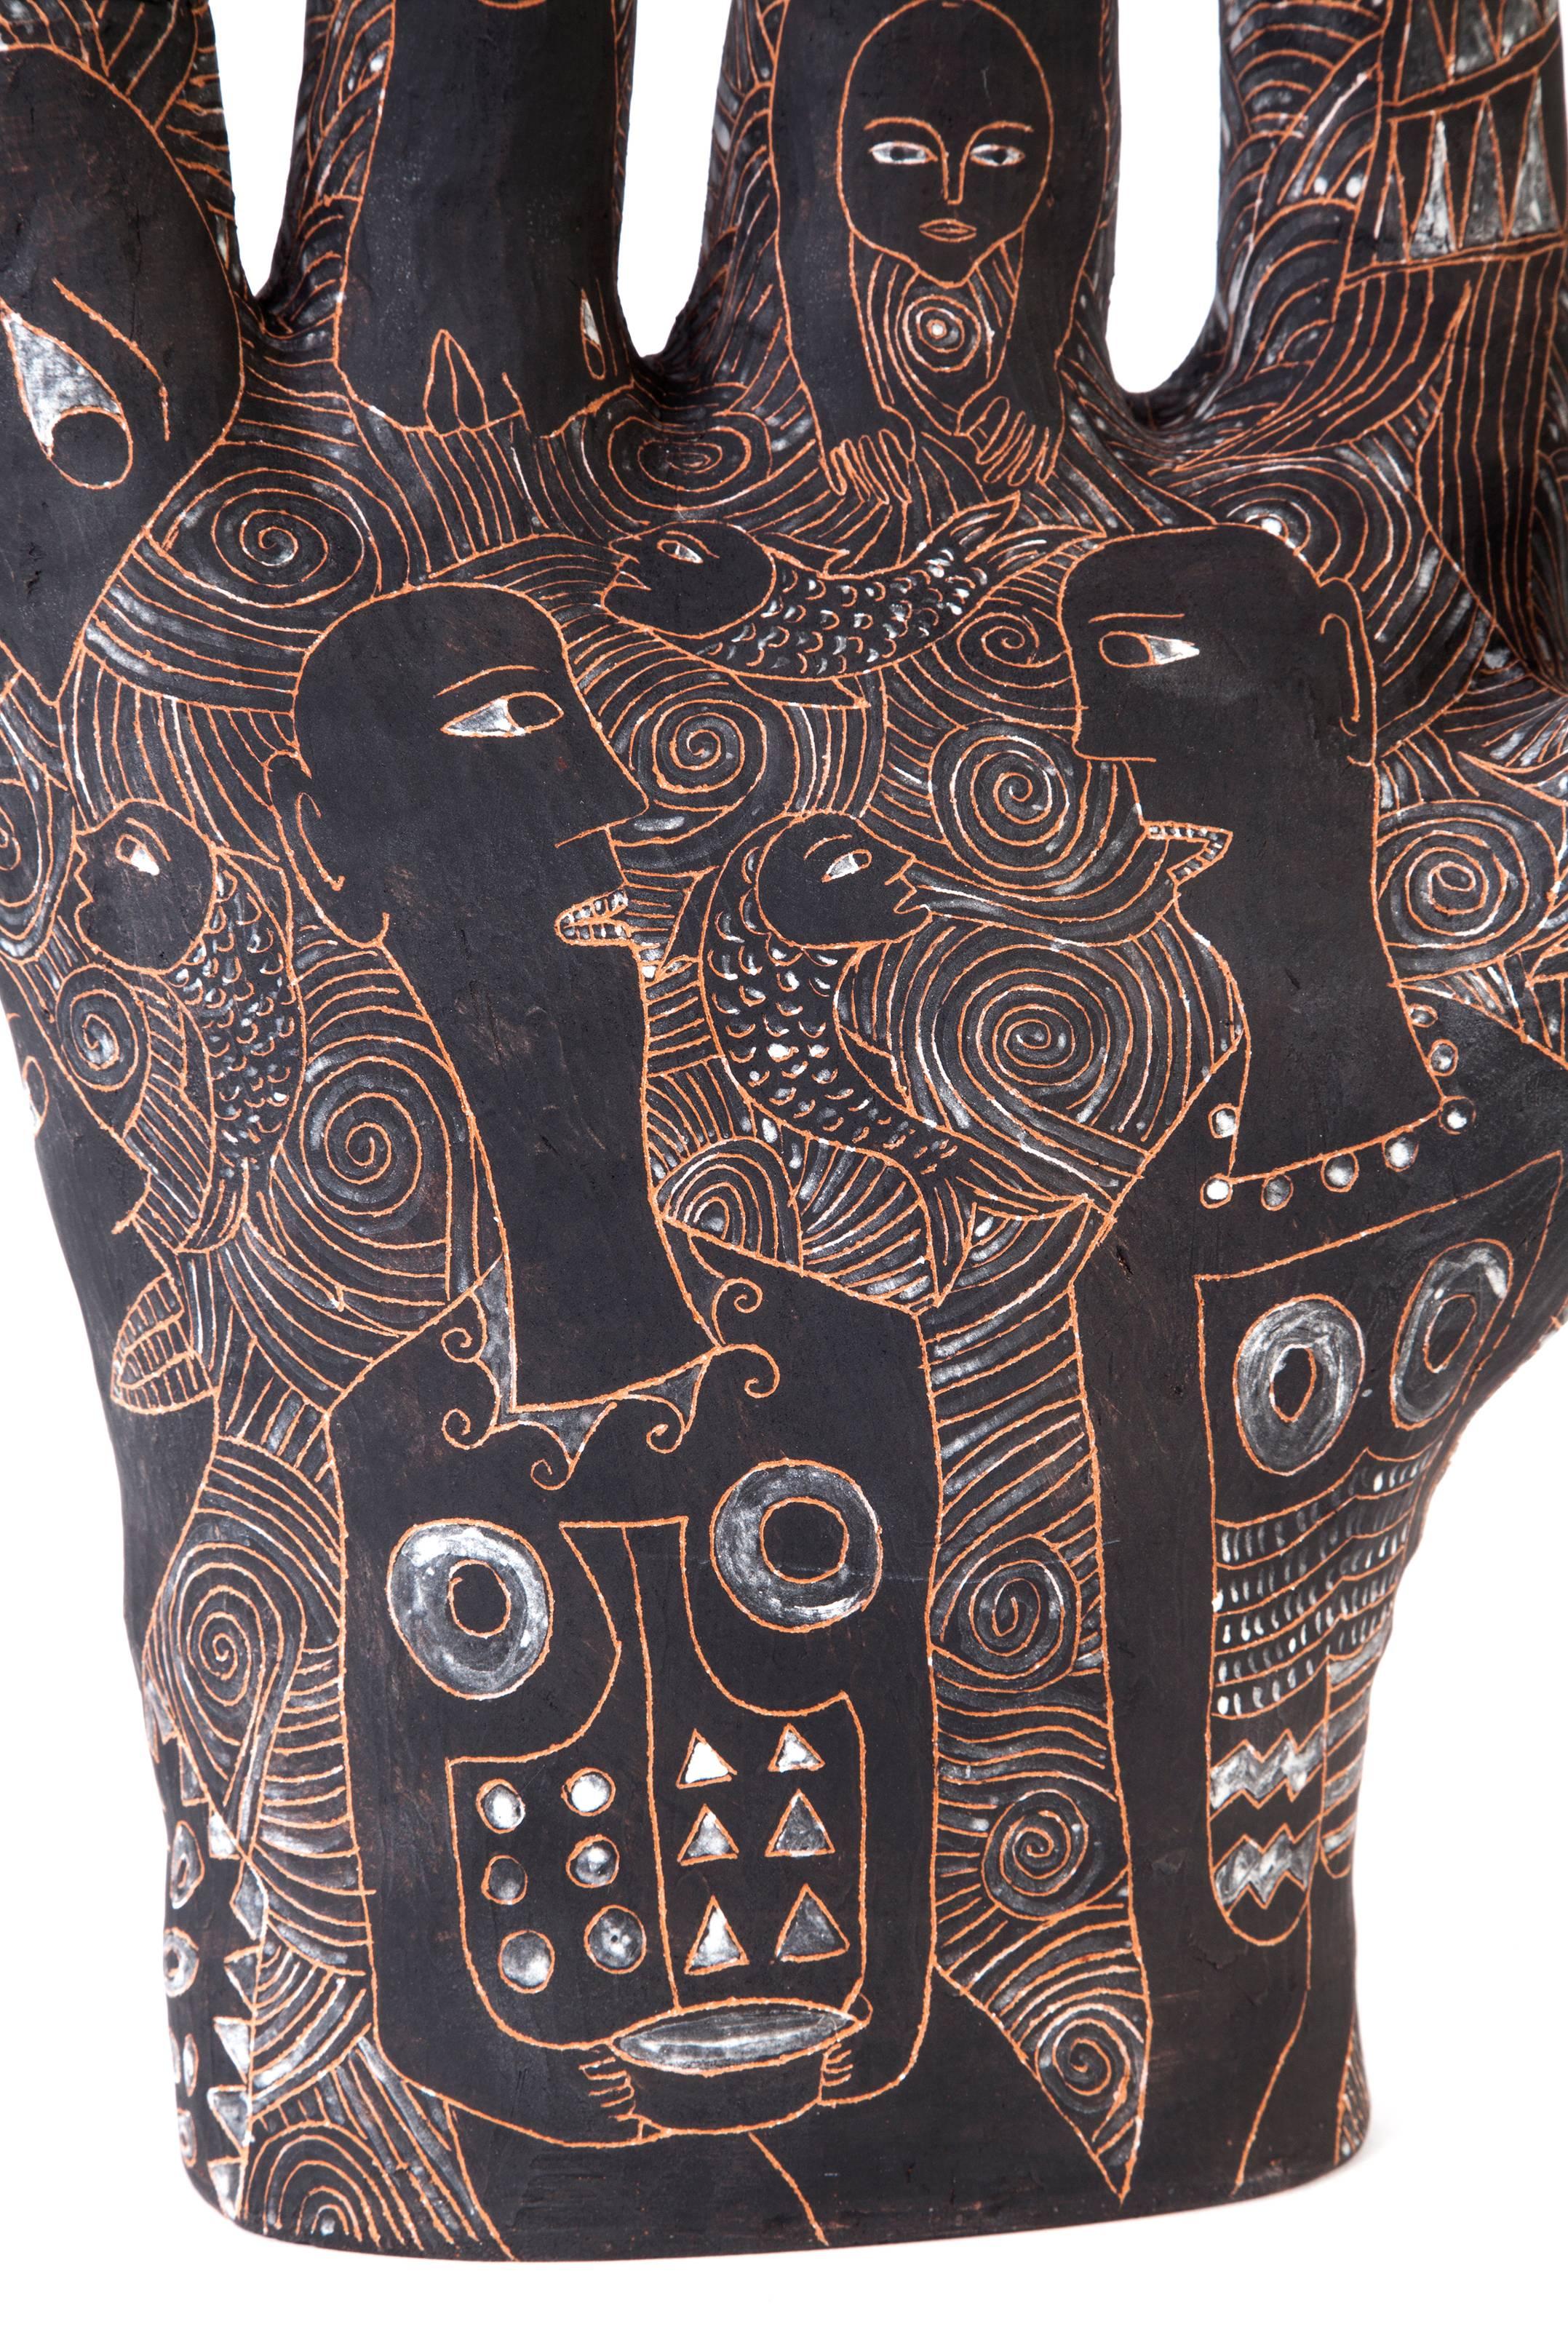 12'' La Mano de Yanhuitlan / Ceramics Mexican Folk Art Clay - Black Figurative Sculpture by Manuel David Reyes Ramirez